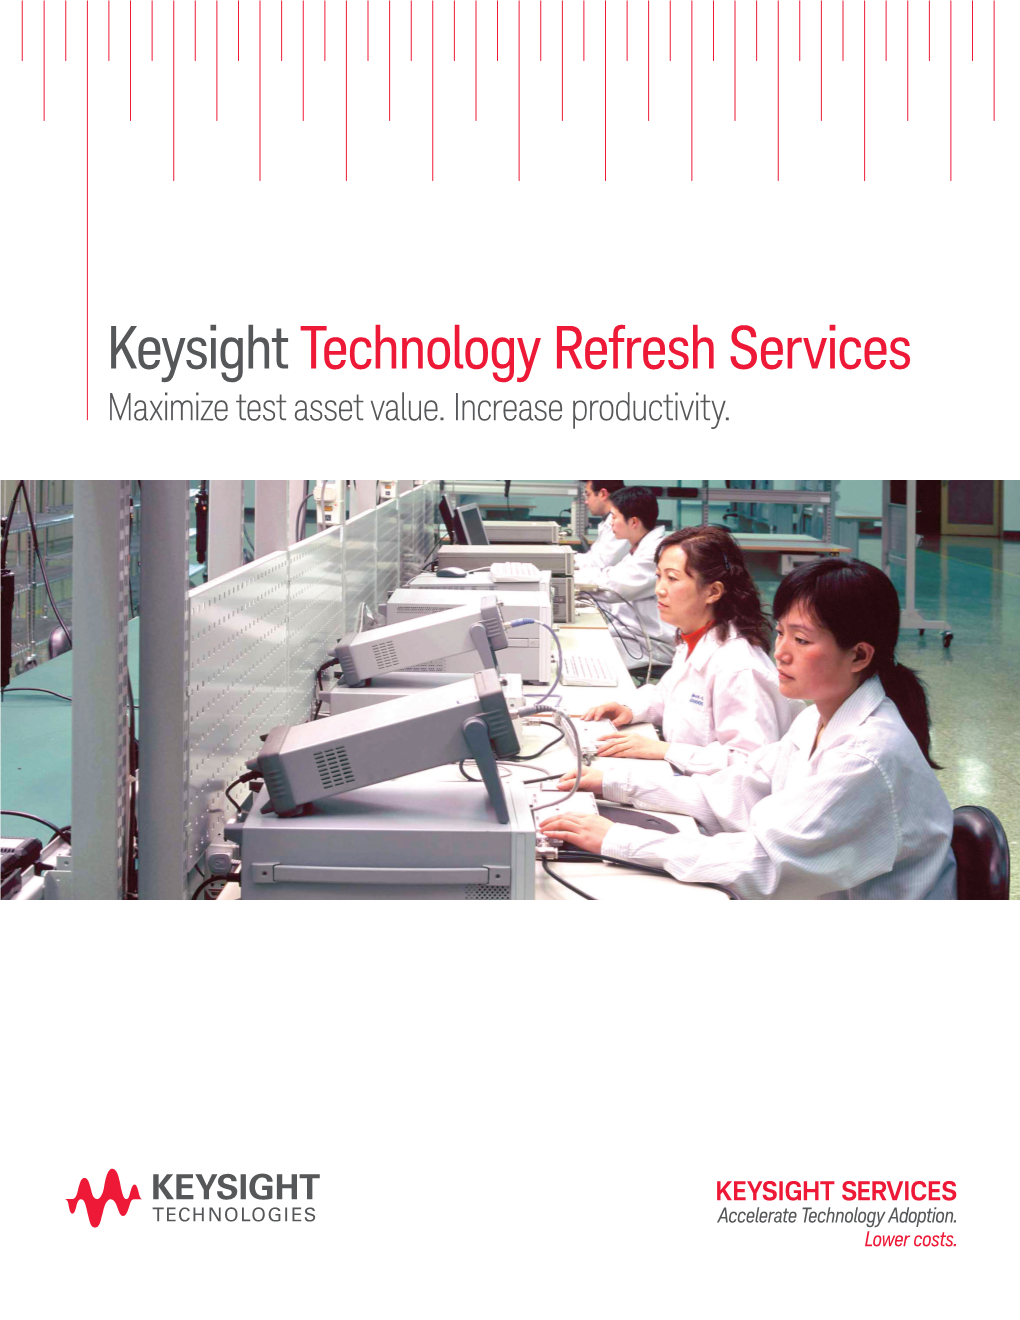 Keysight Technology Refresh Services Maximize Test Asset Value